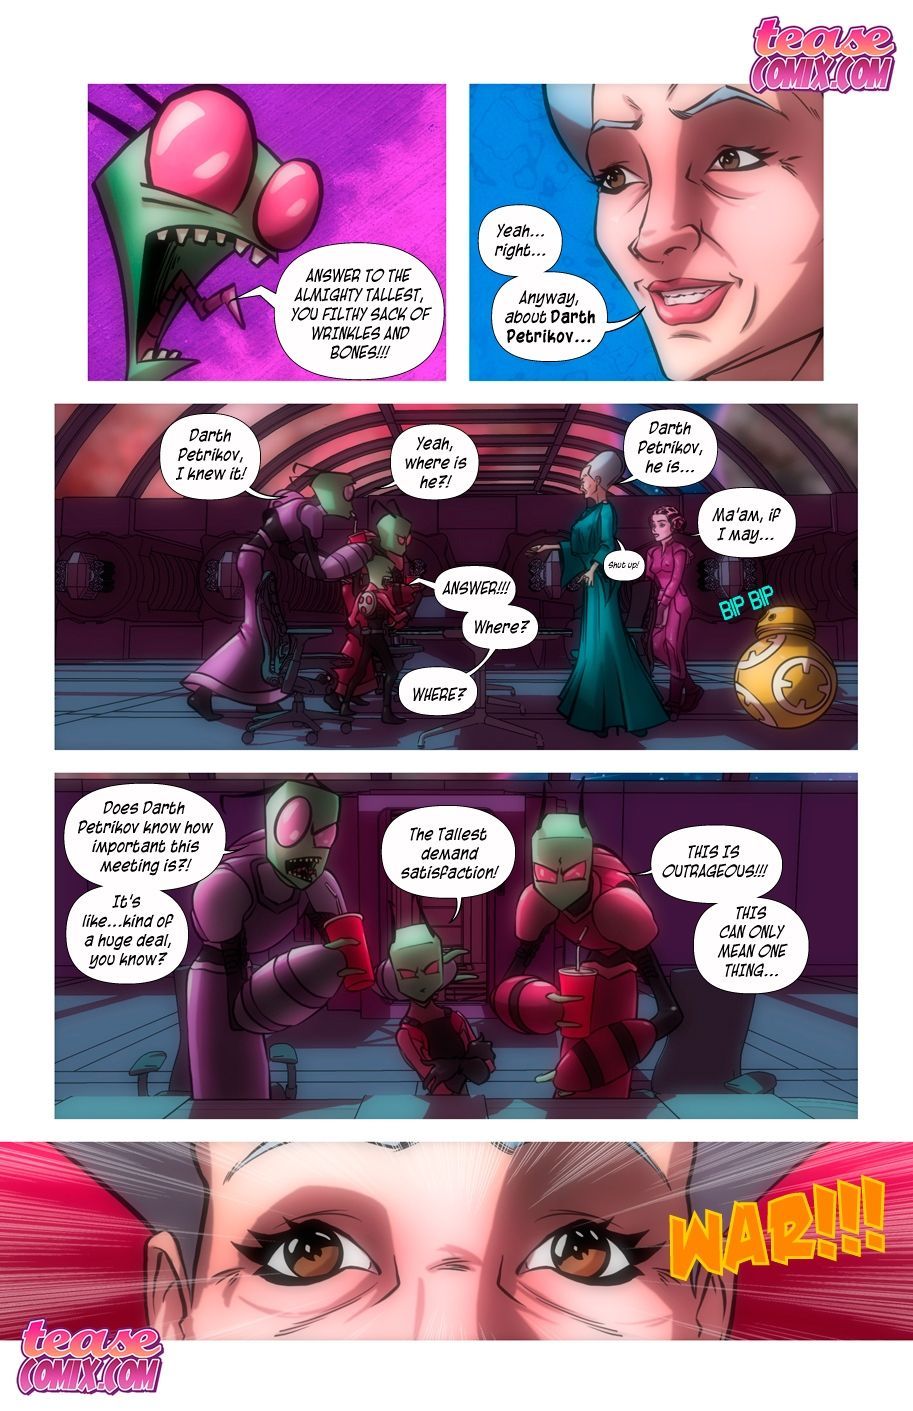 Space Slut (Star Wars) by Kaizen2582 page 6